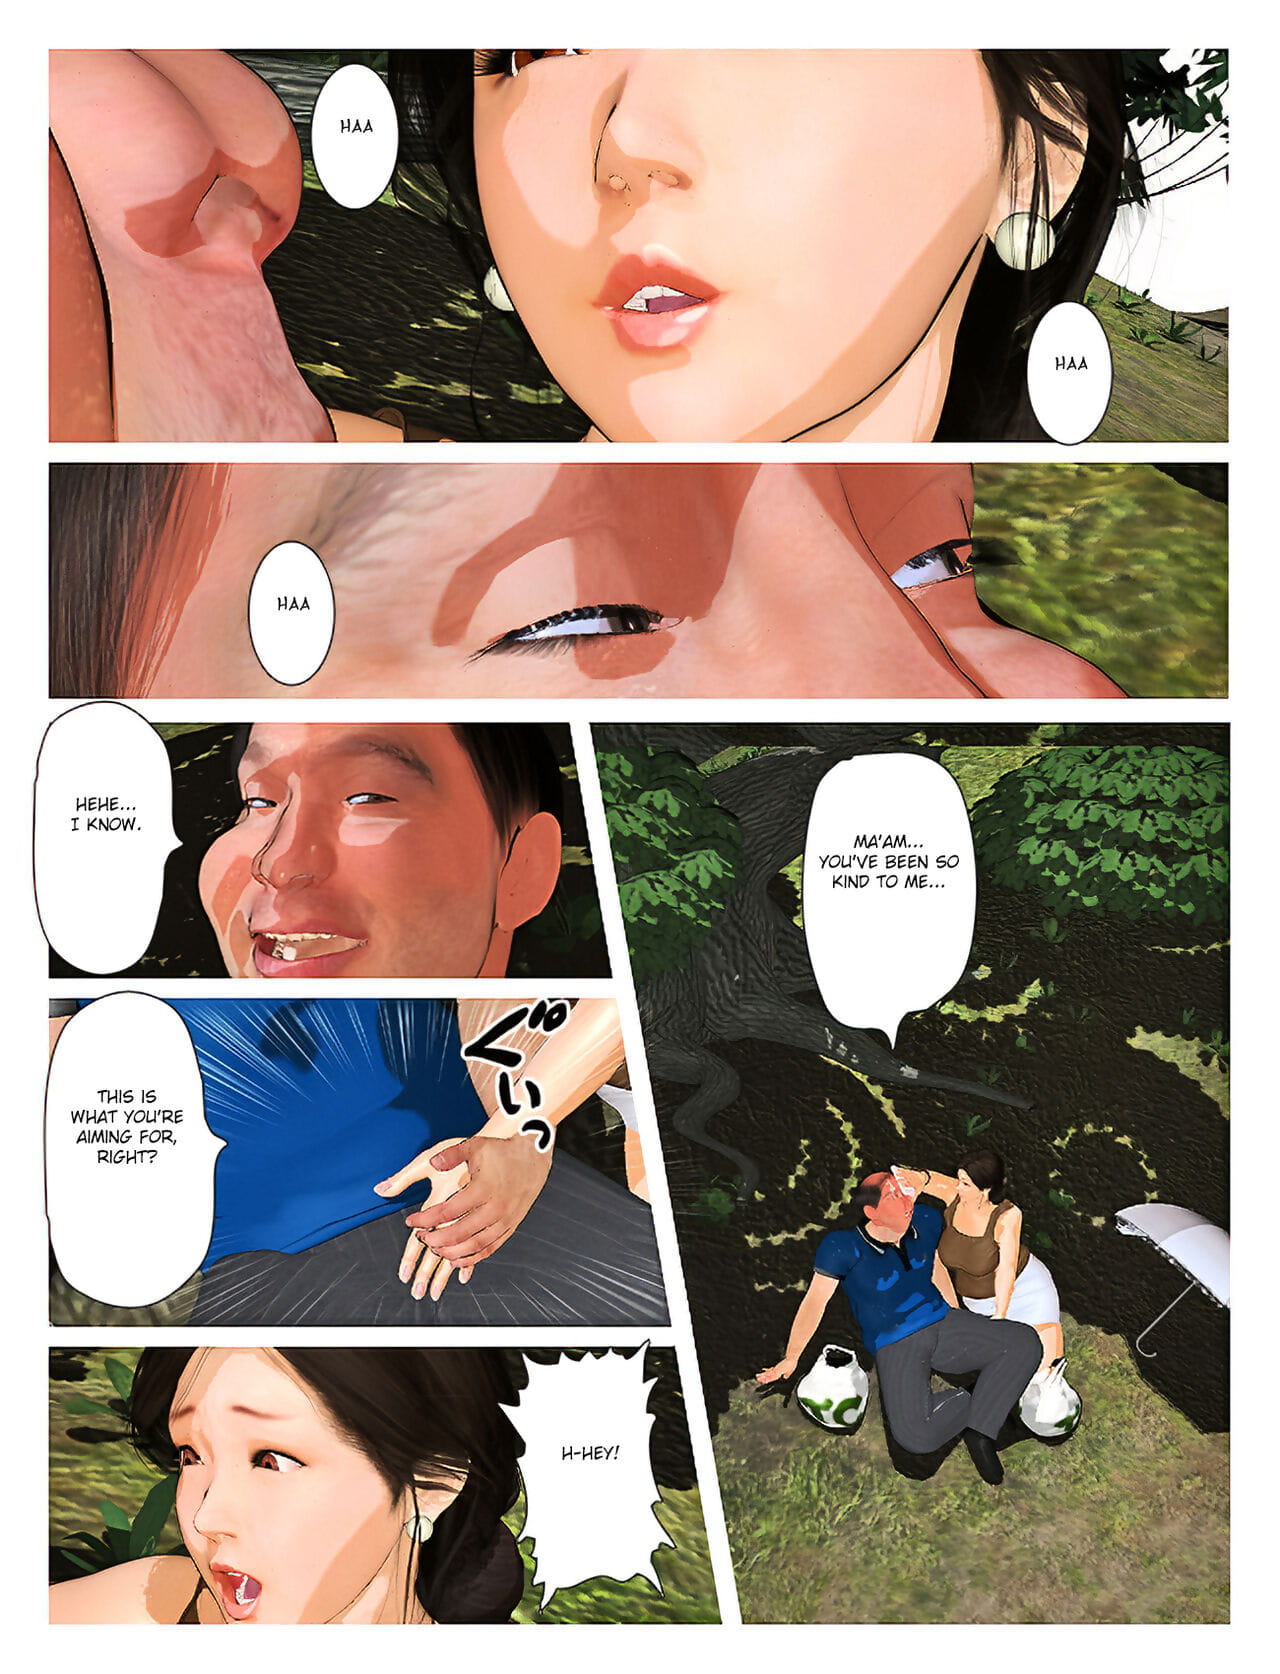 Kyou pas de misako san 2019:2 page 1